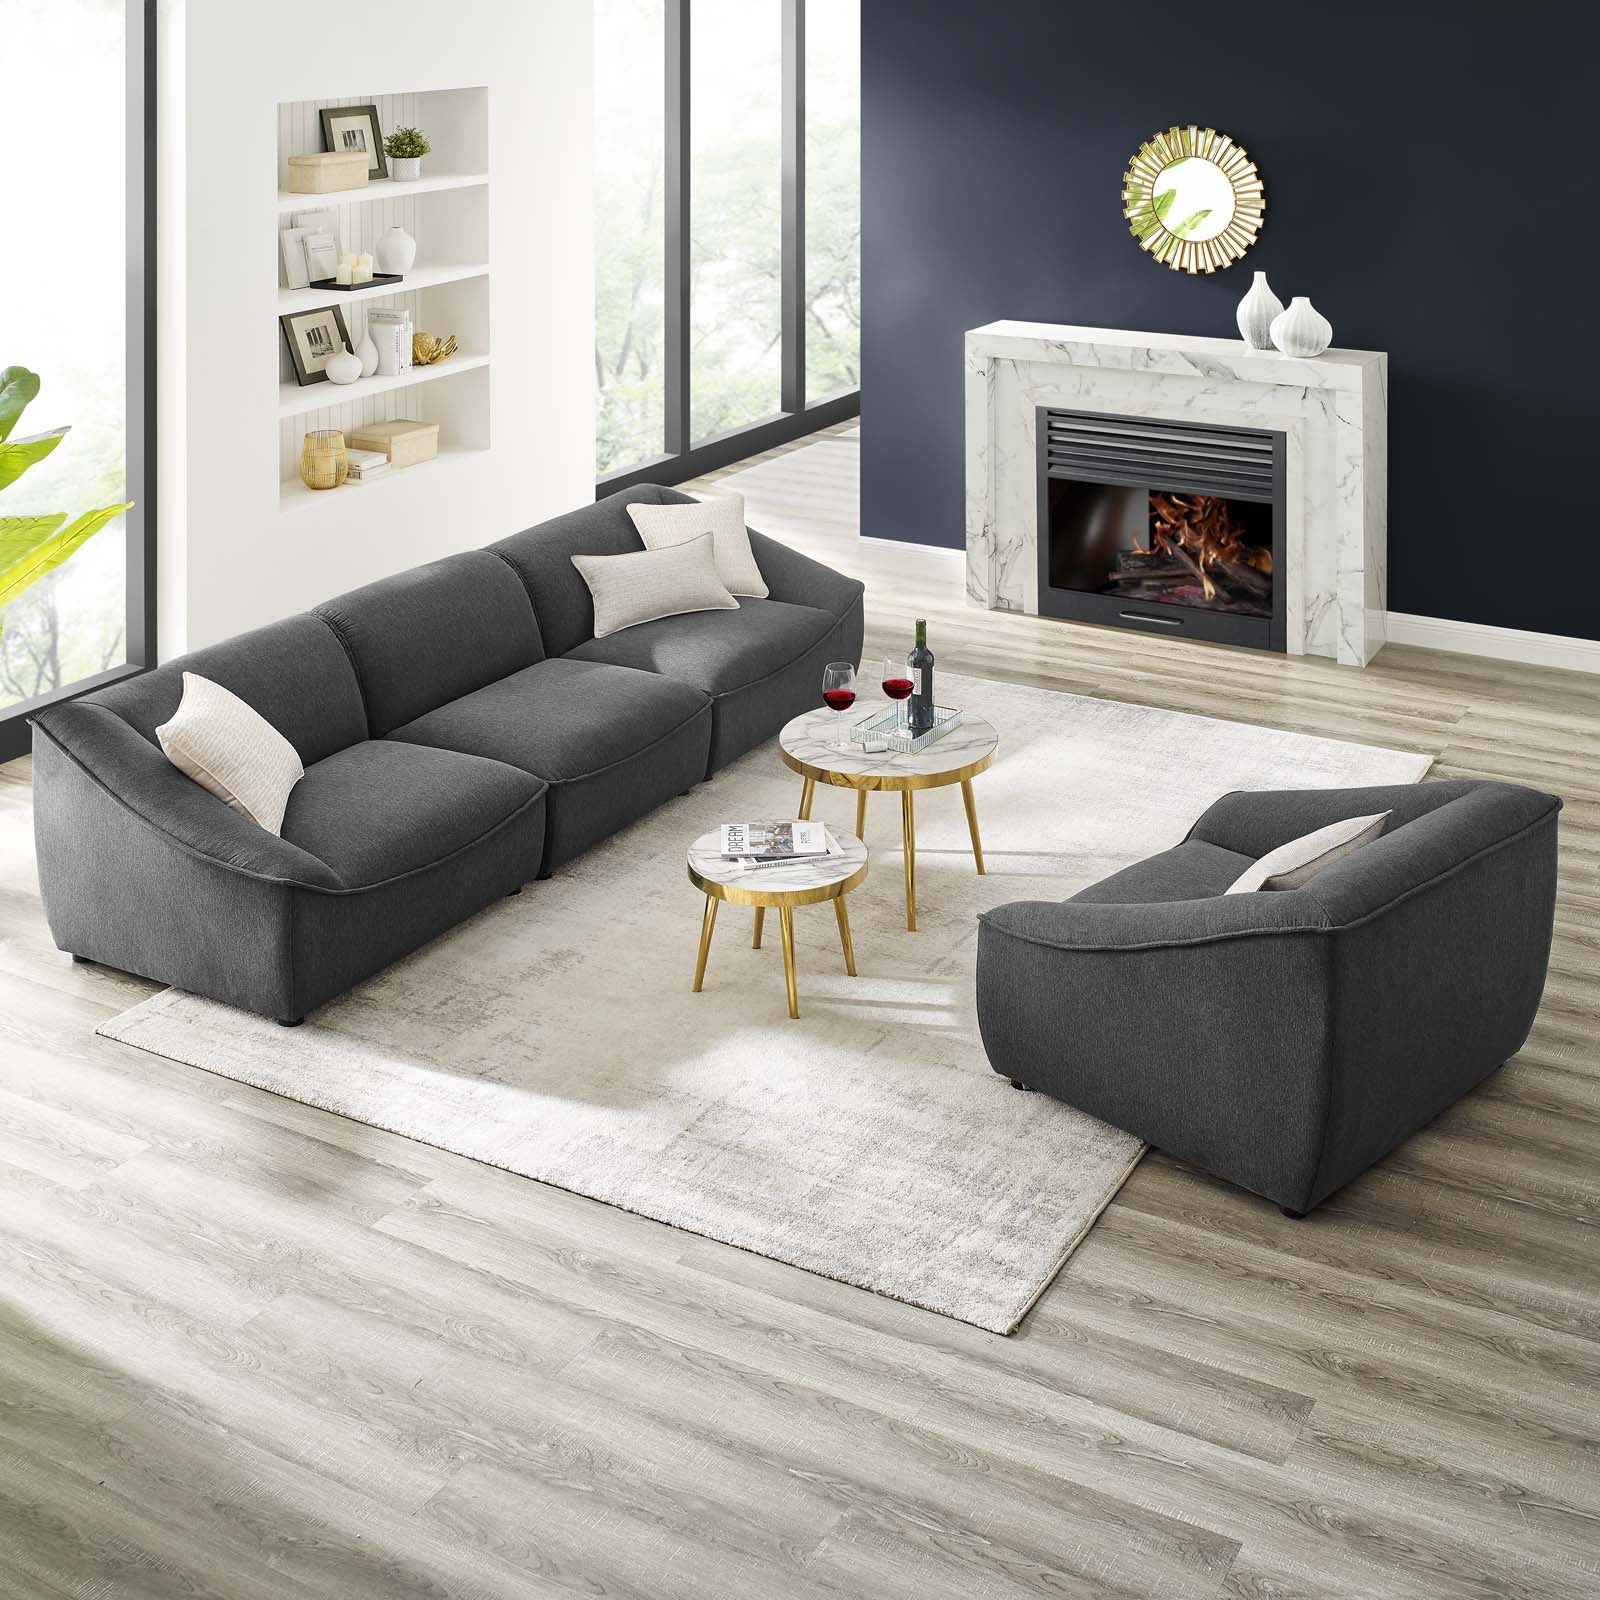 Modway Living Room Sets - Comprise-4-Piece-Living-Room-Set-Charcoal